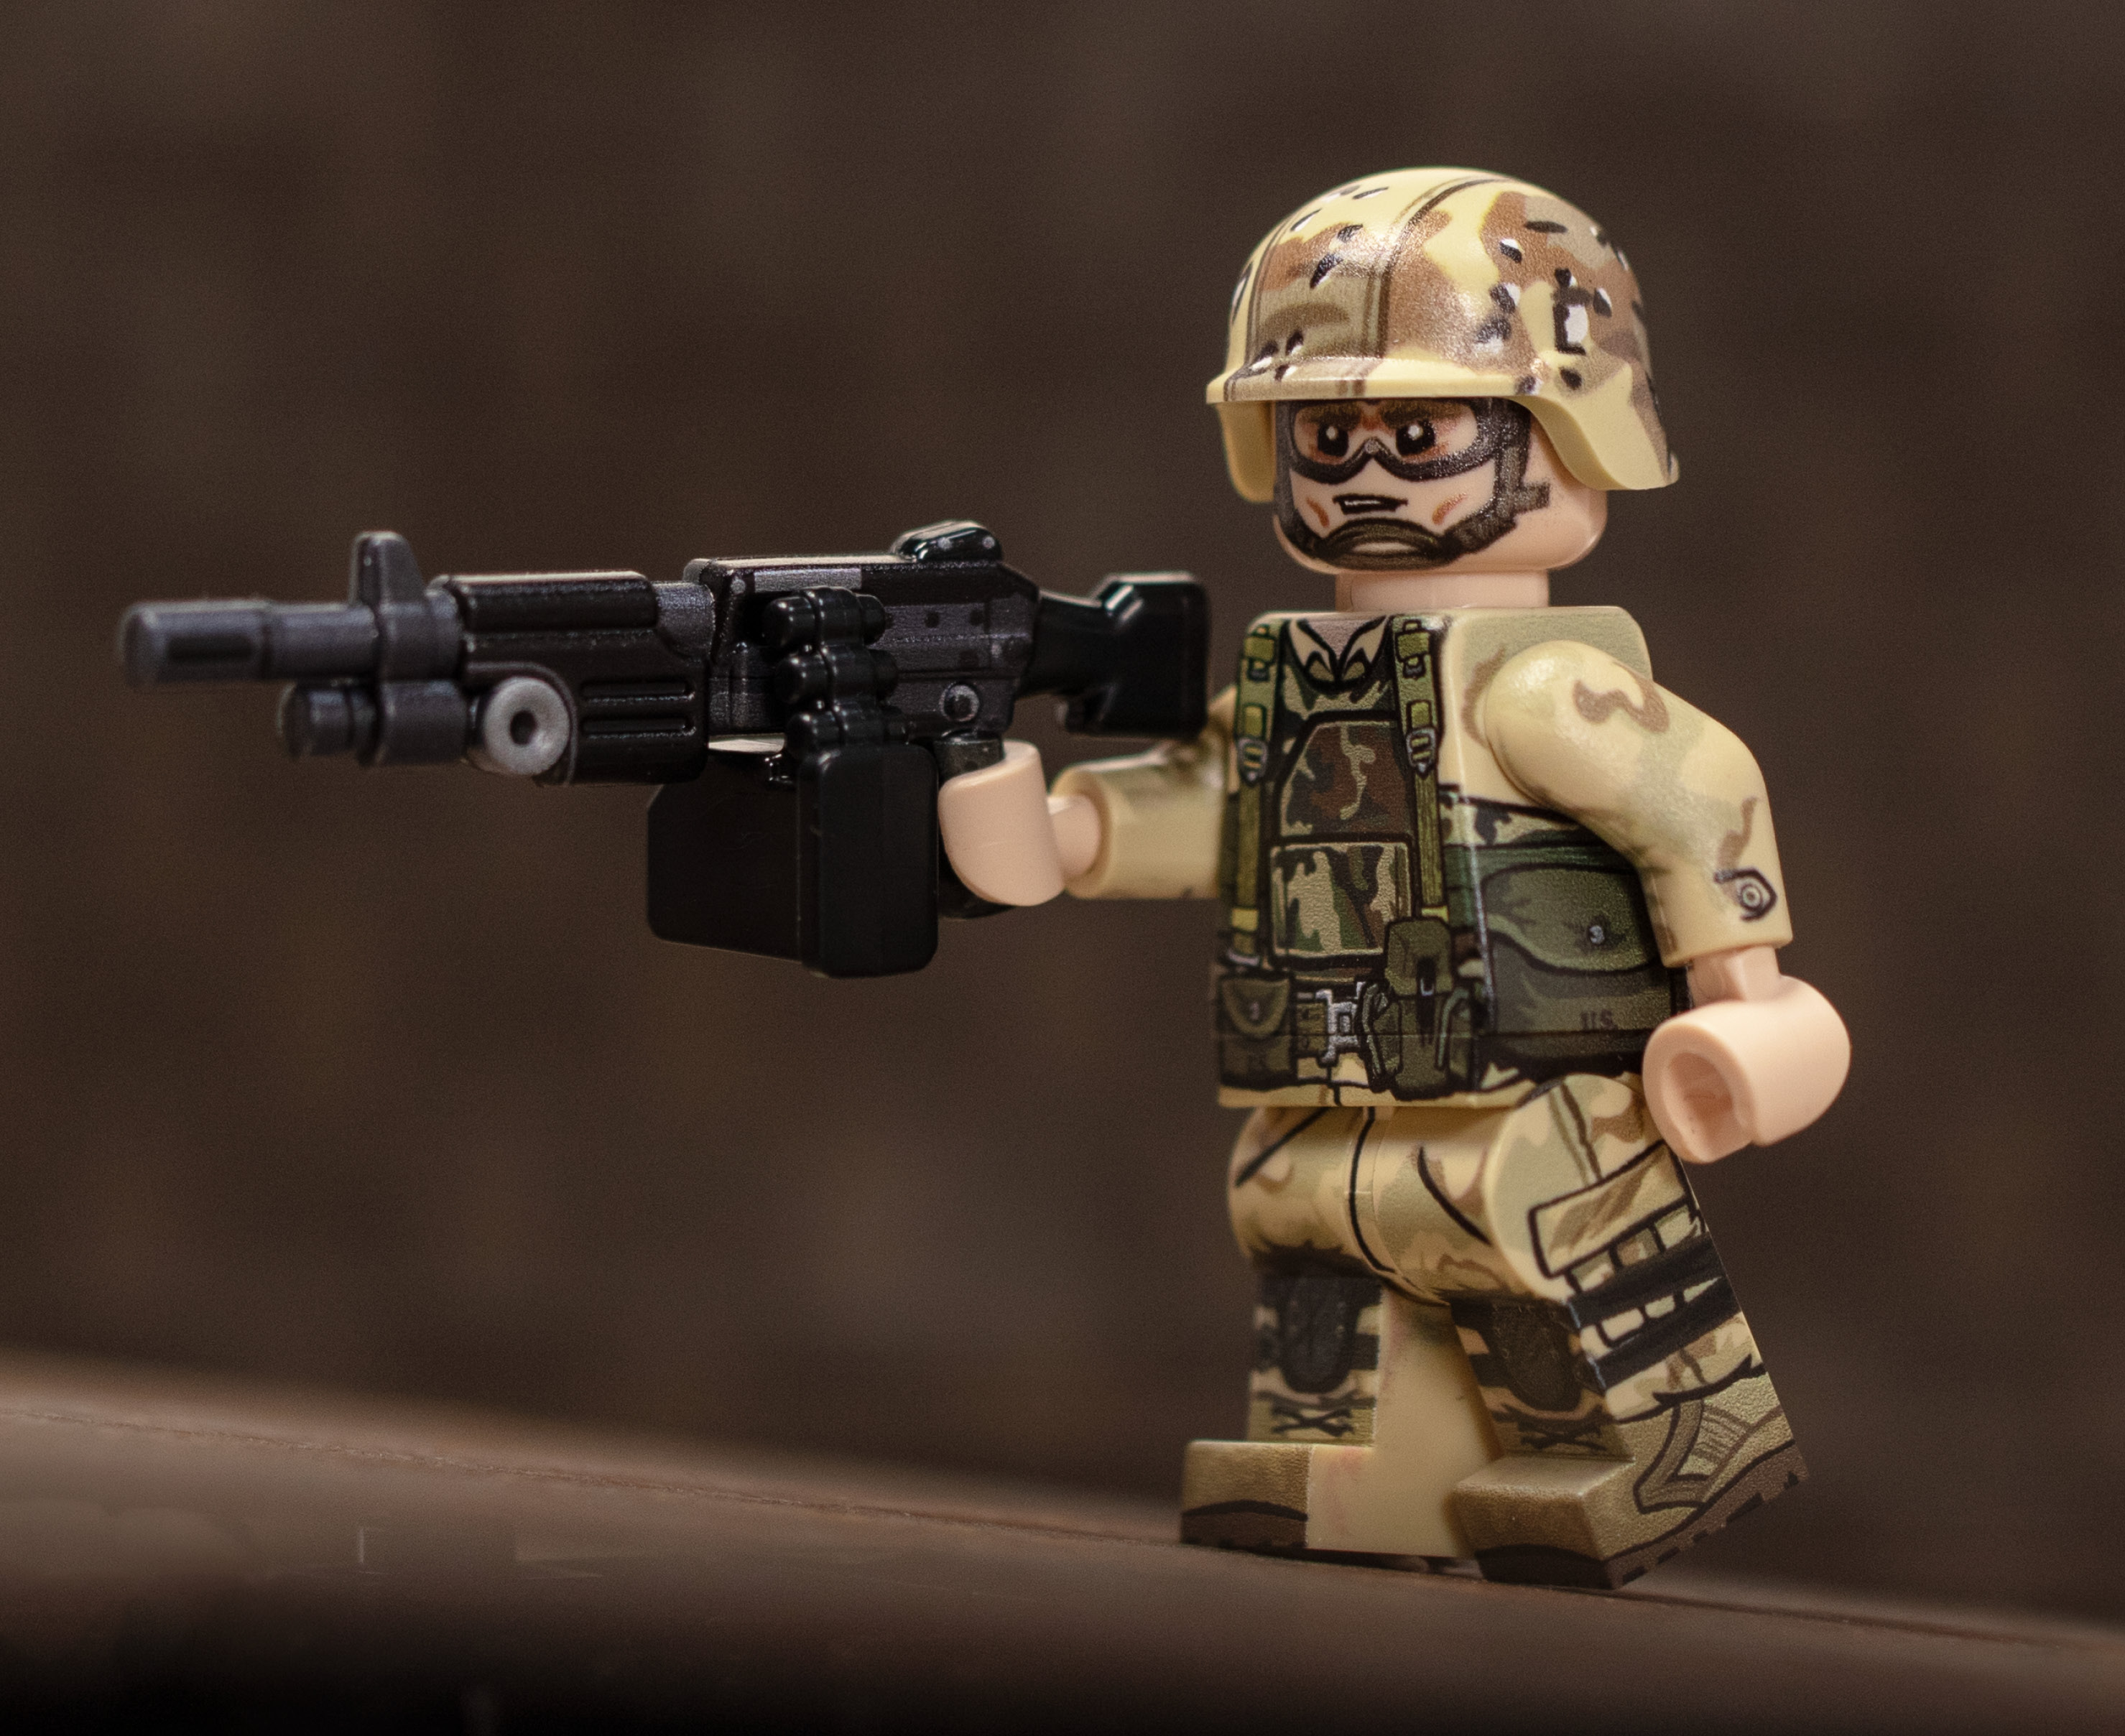 Battle Brick US Army Rangers Custom Minifigure